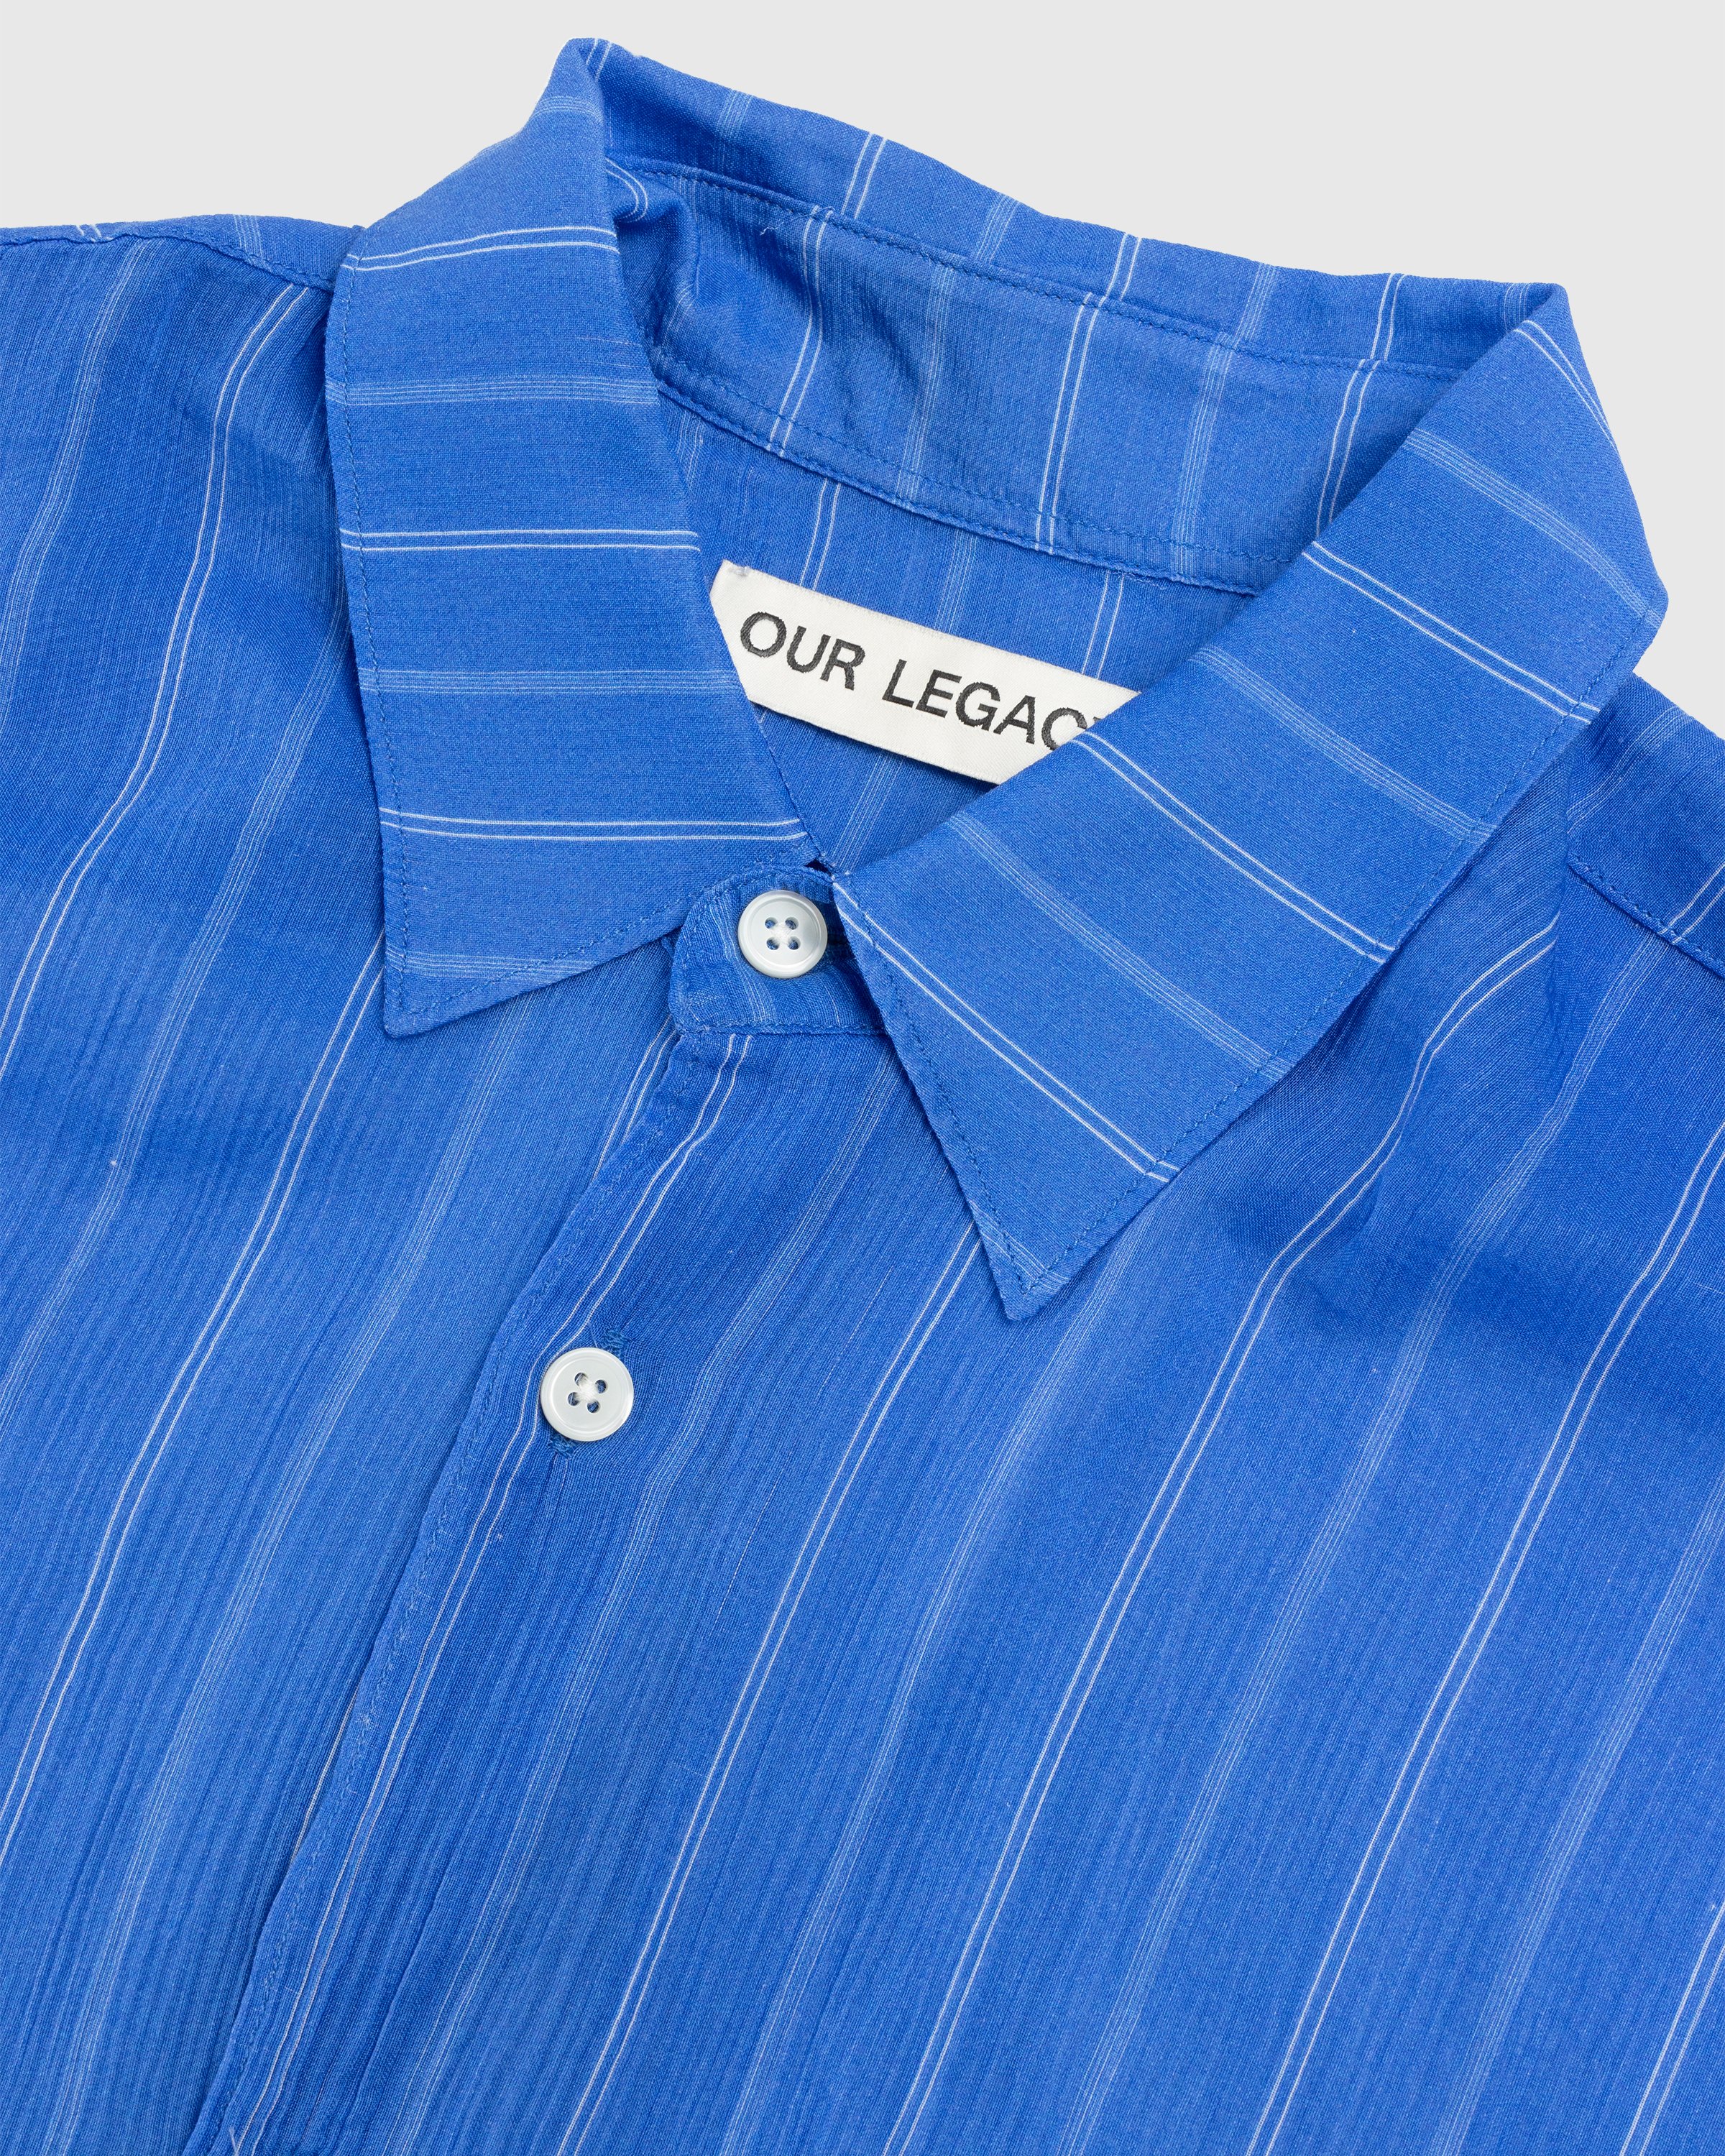 Our Legacy - Initial Shirt Blue Rayon Plait Stripe - Clothing - Blue - Image 5